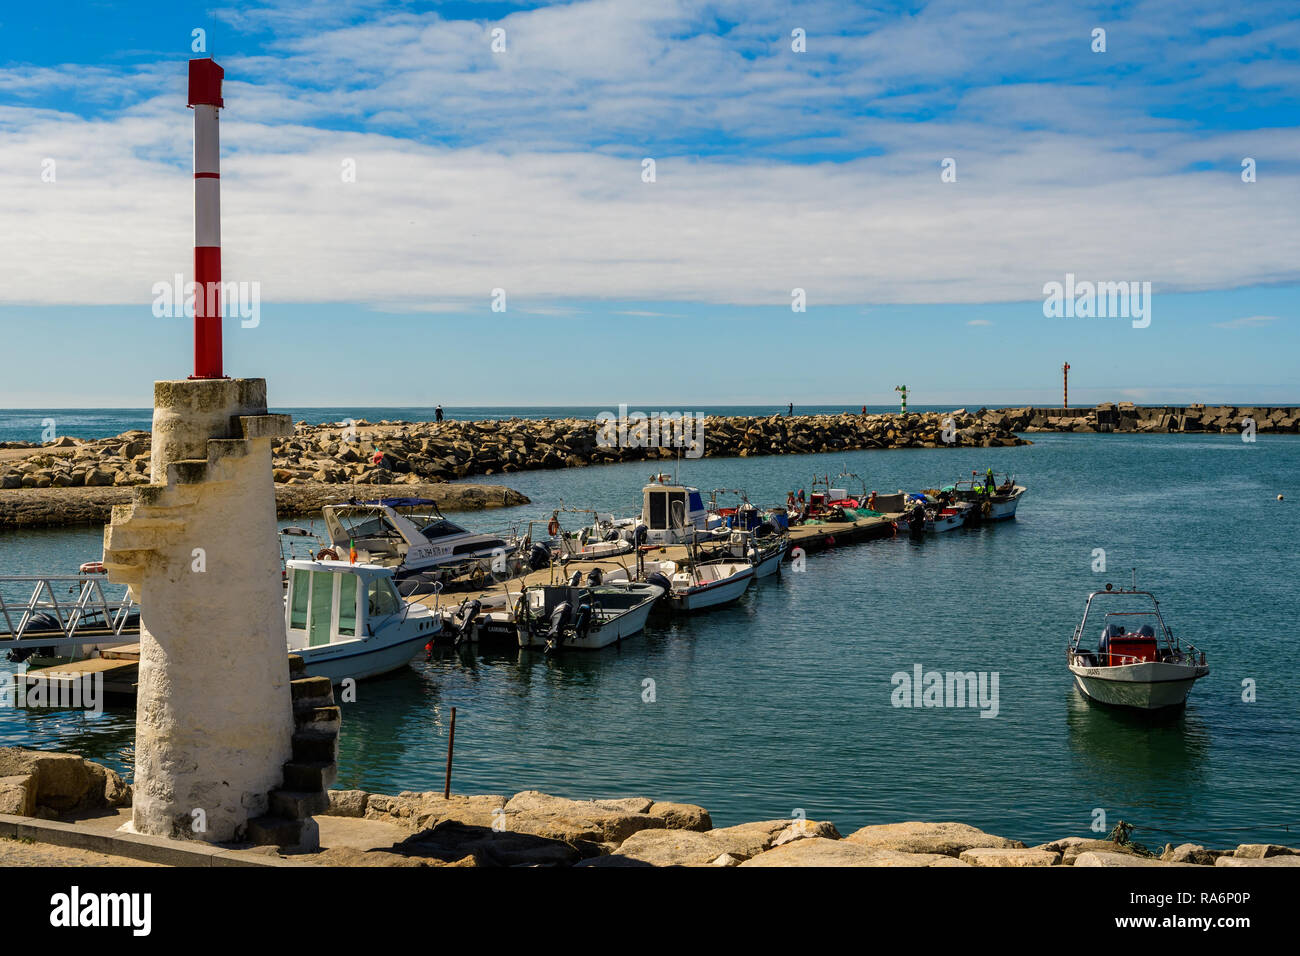 Vila Praia de Ancora, Portugal - September 17, 2017 : Pier and the city, Vila Praia de Ancora, Portugal Stock Photo